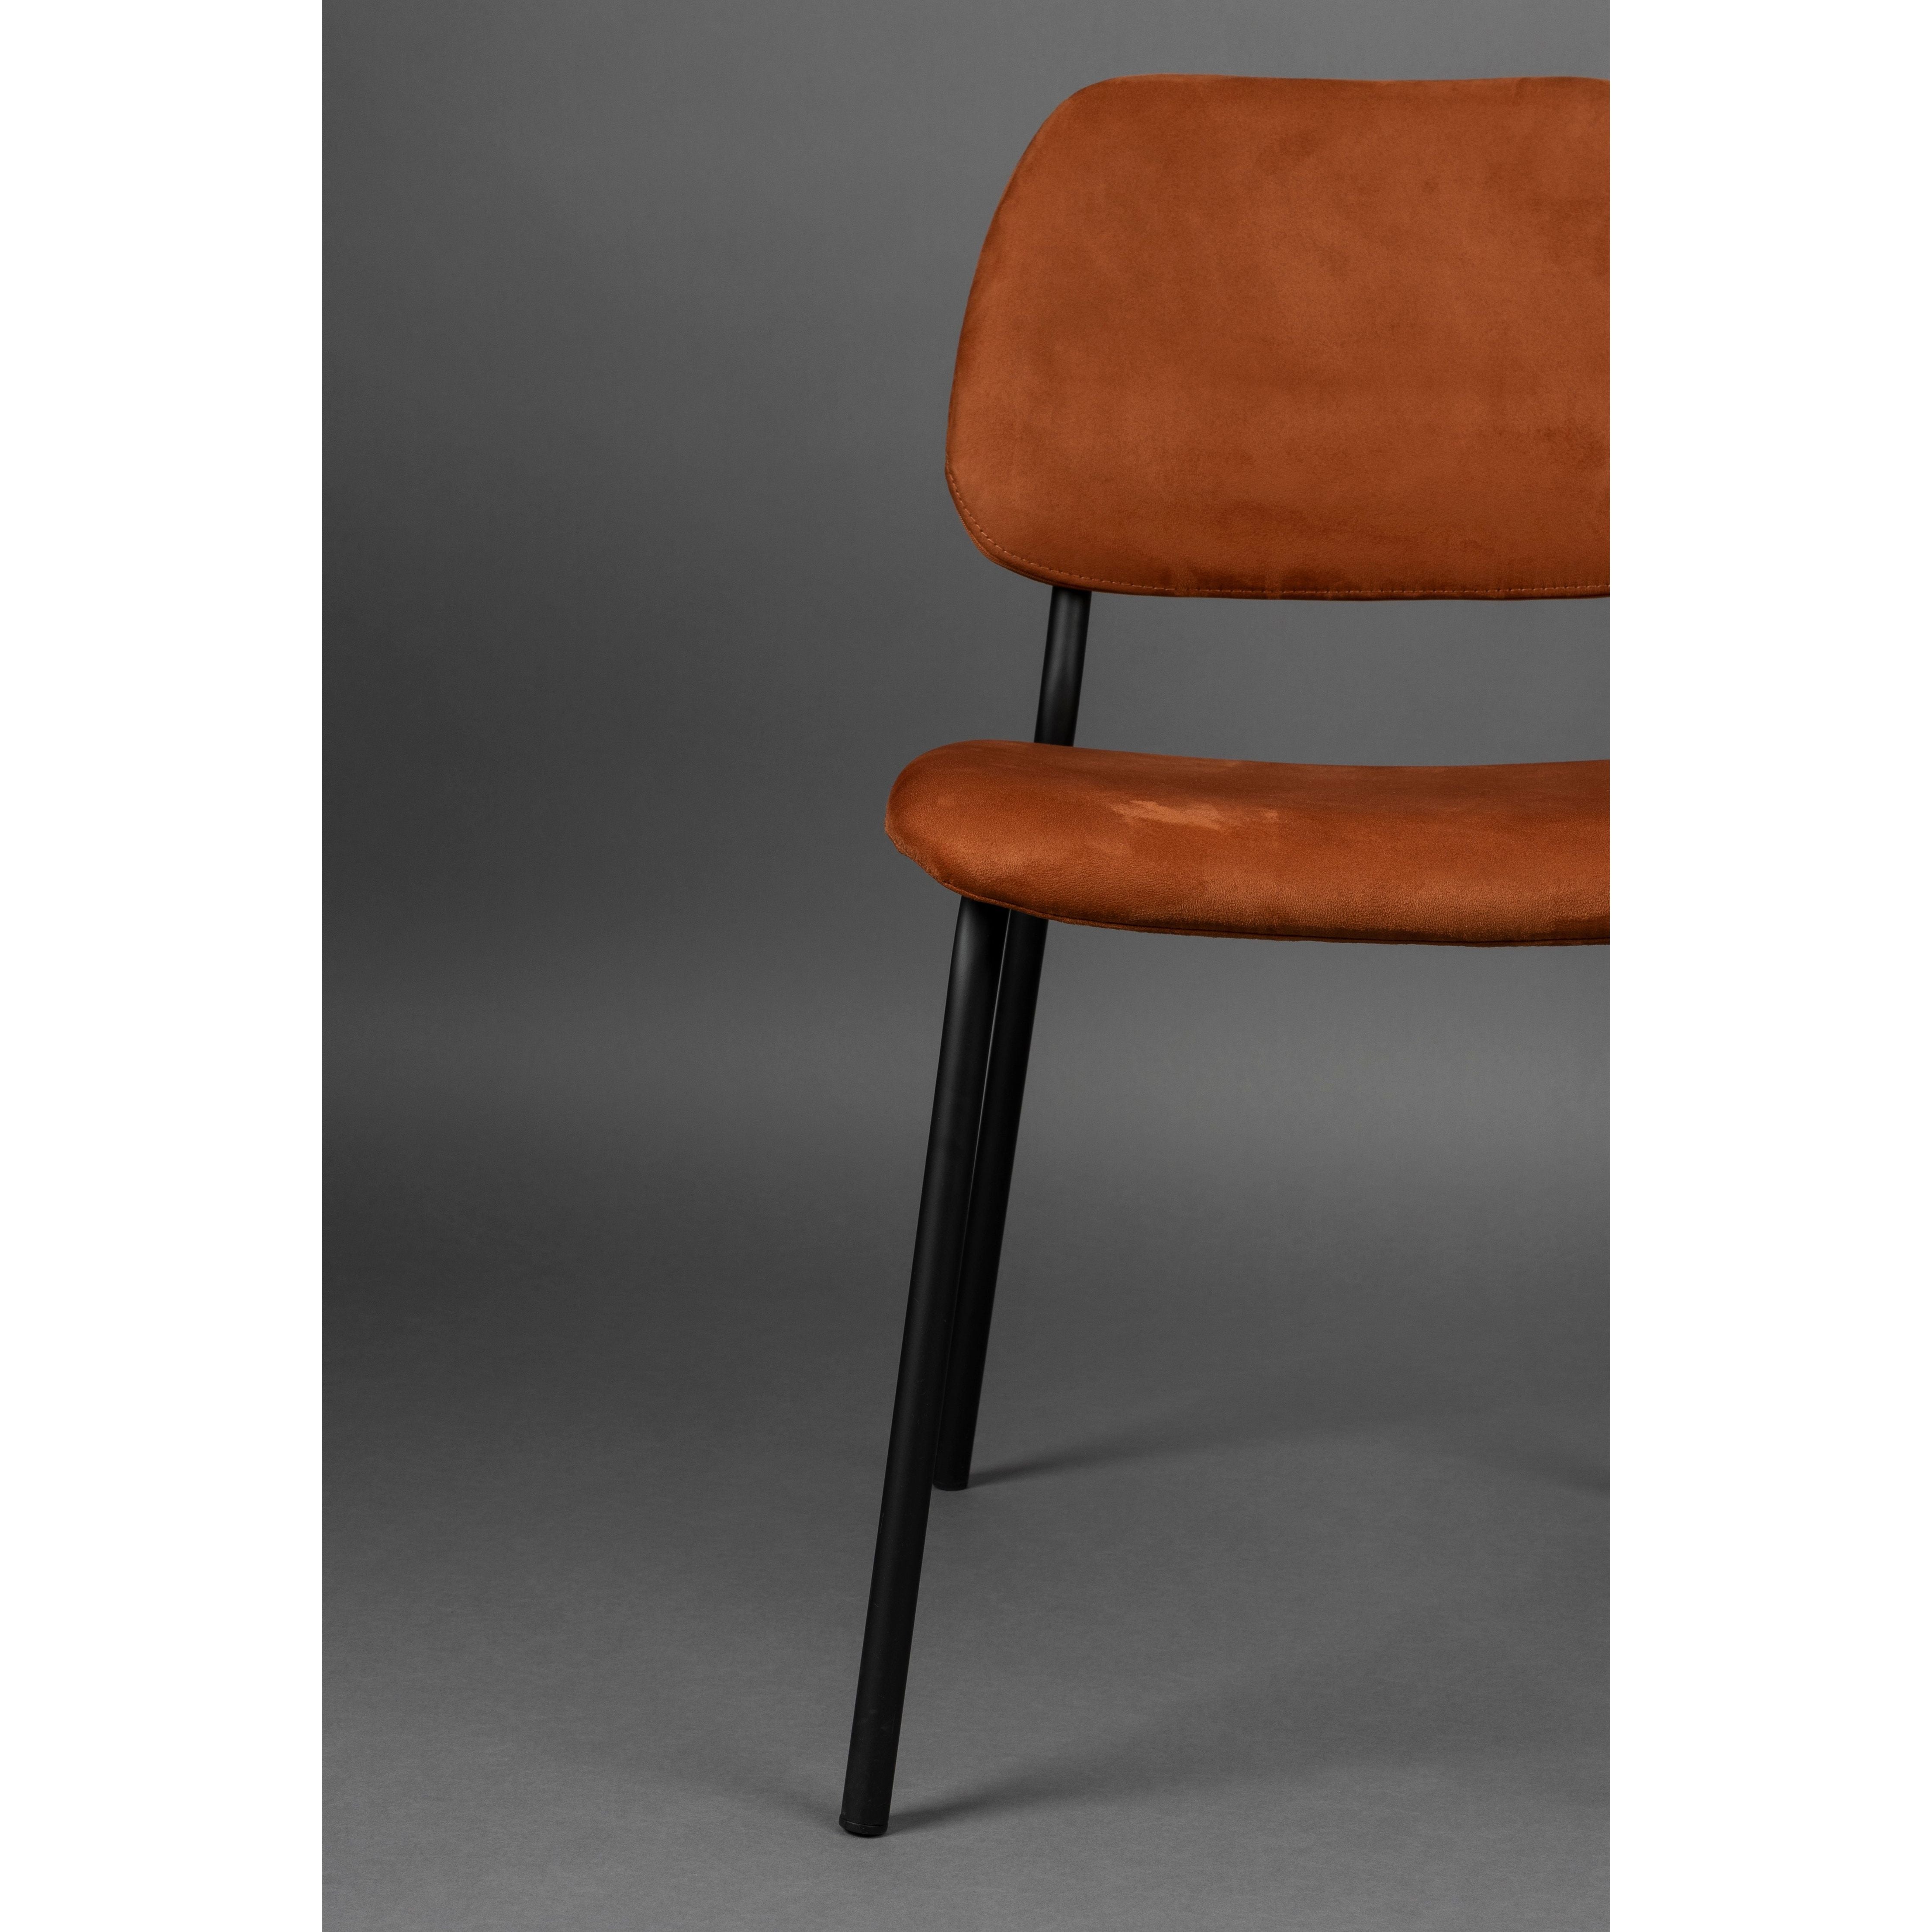 Chair darby terra cotta | 2 pieces